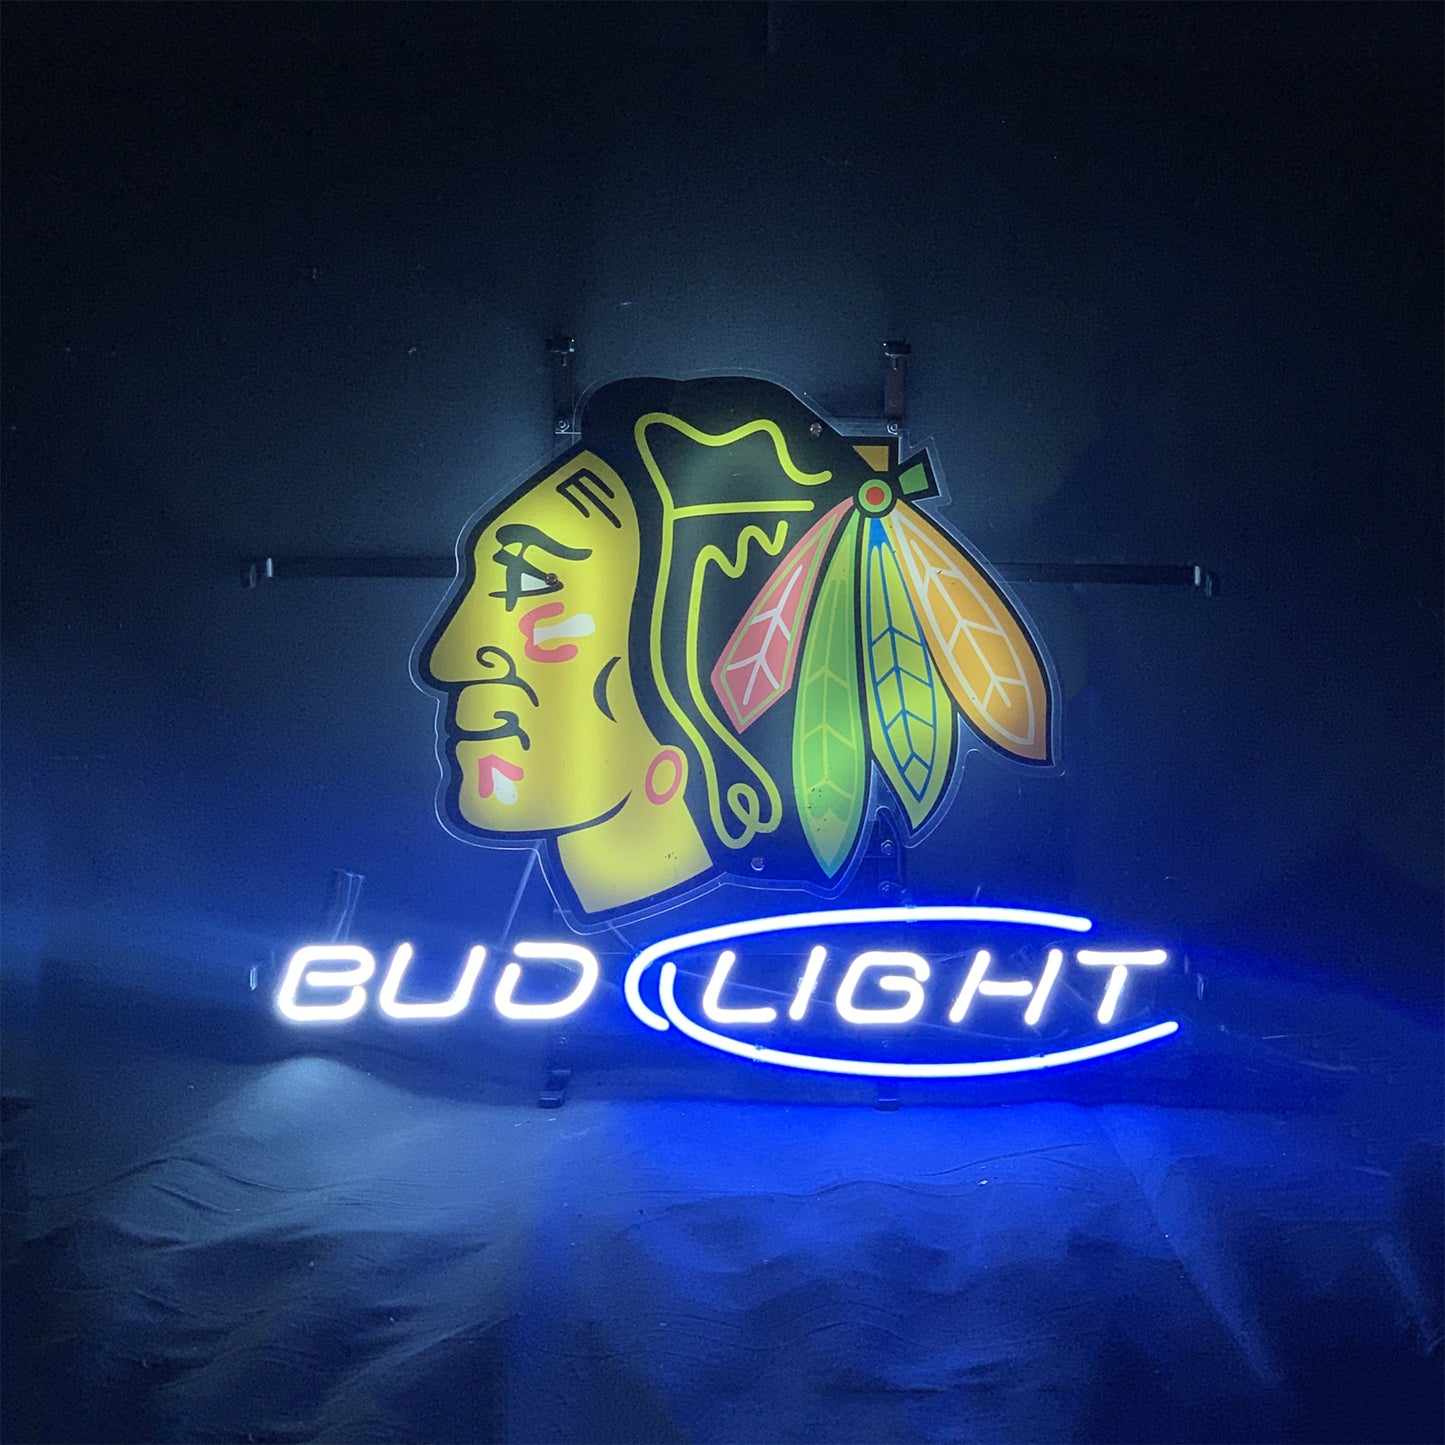 Chicago Hockey BVD Light